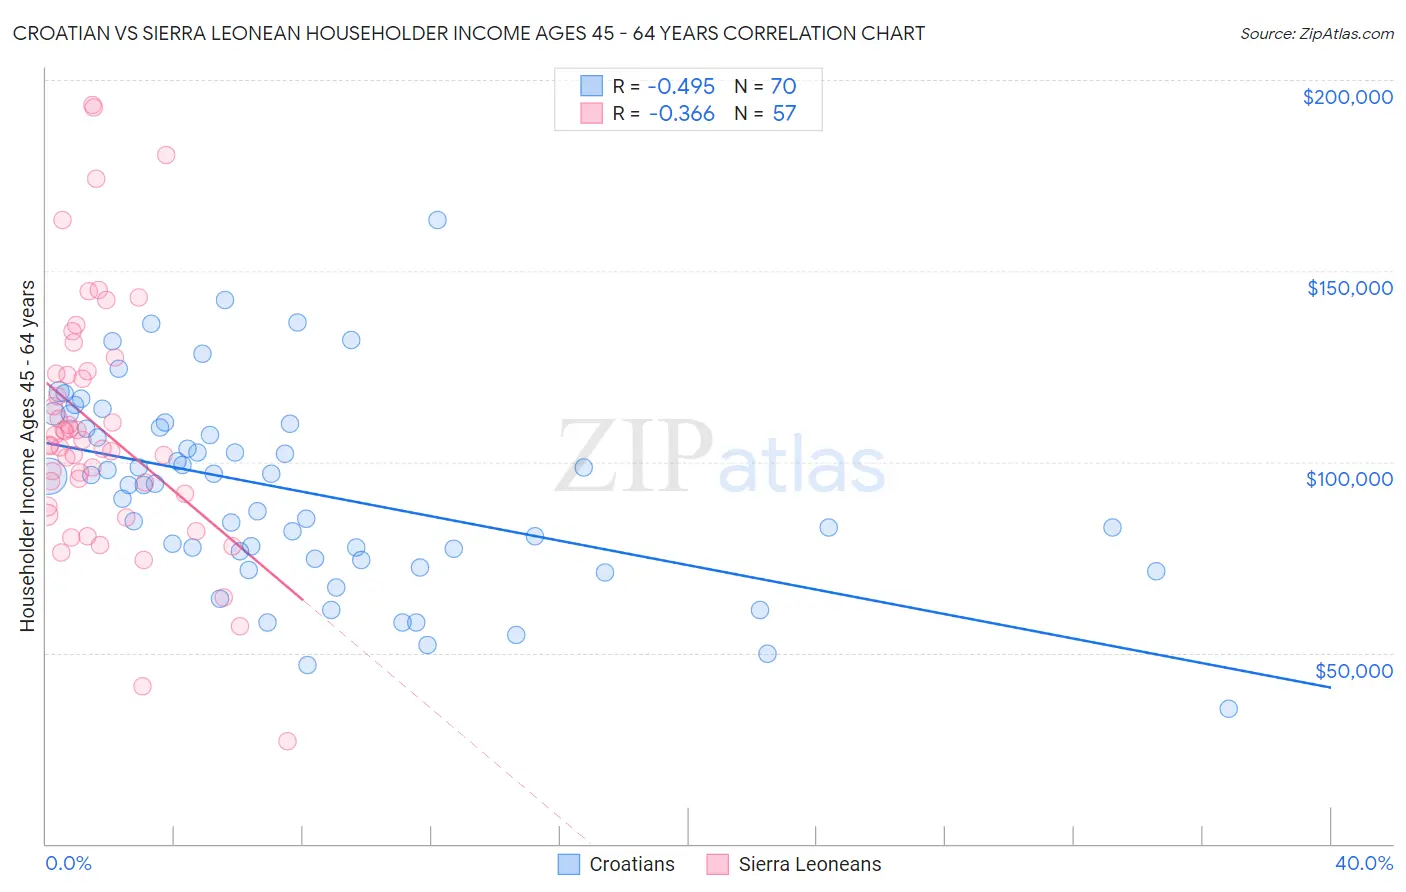 Croatian vs Sierra Leonean Householder Income Ages 45 - 64 years